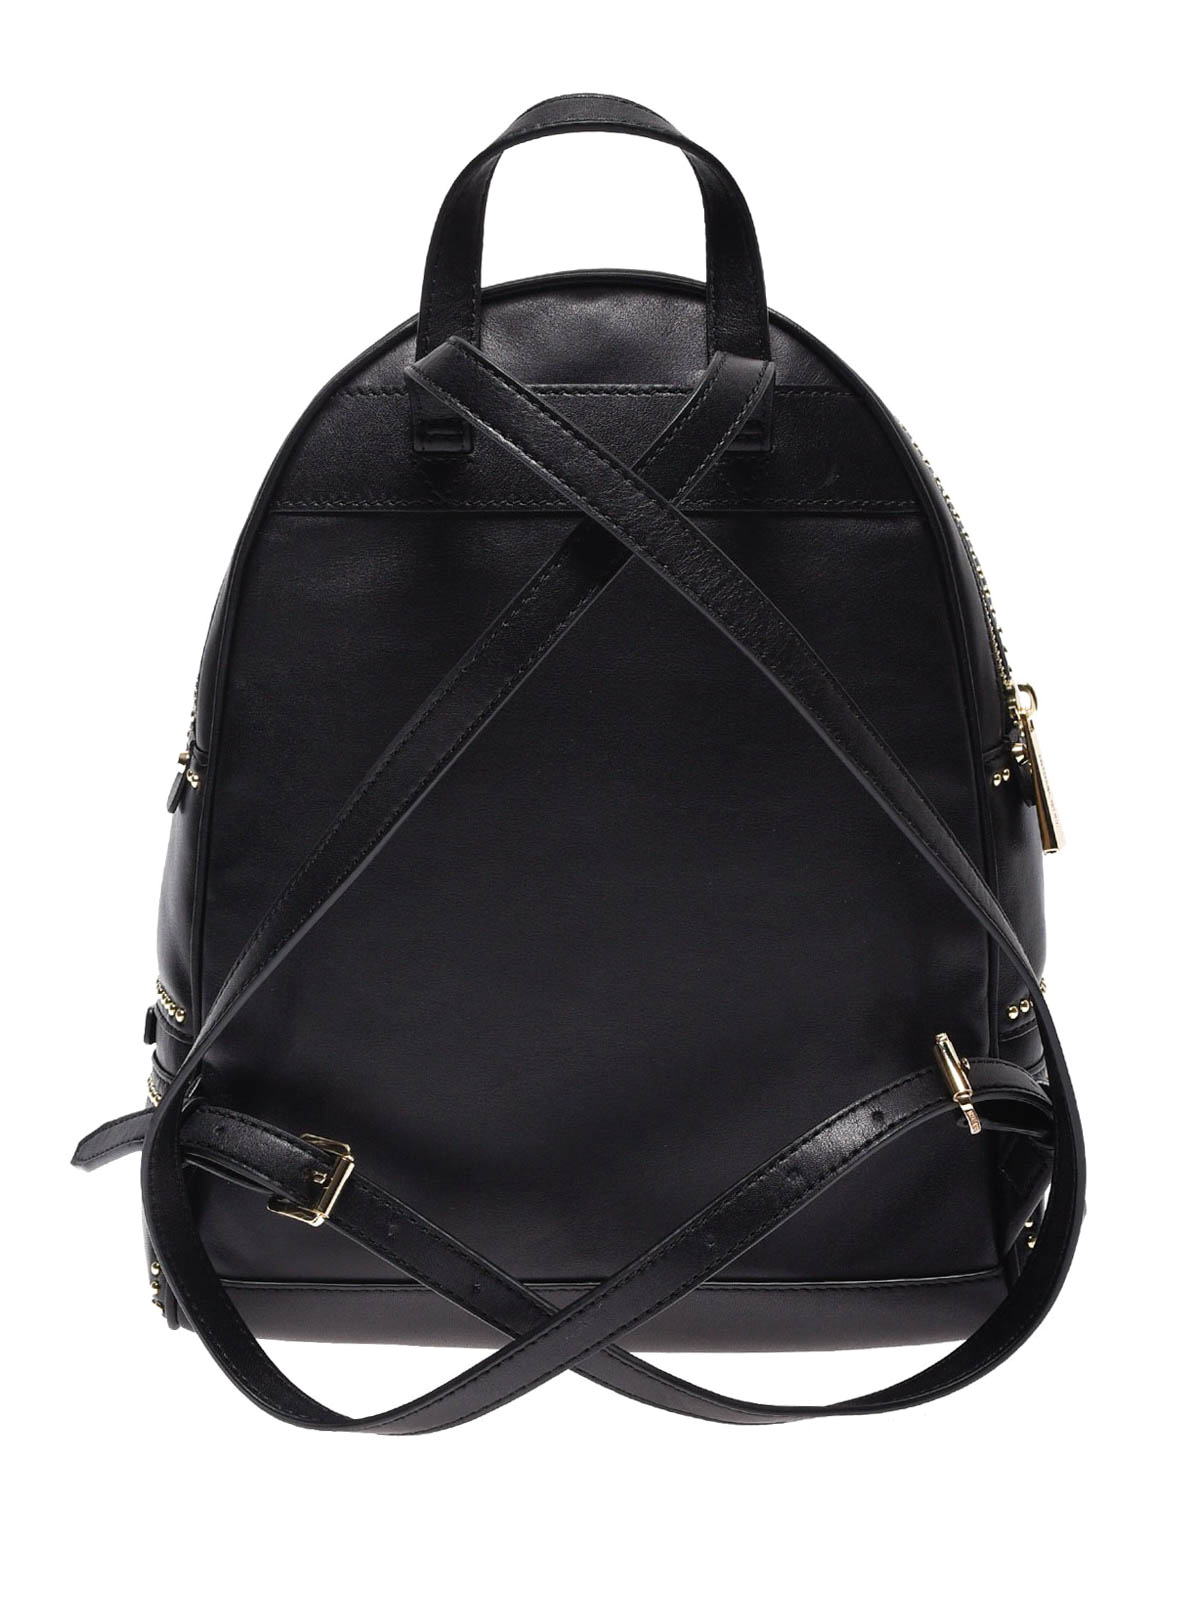 Buy Michael Kors Rhea Zip Medium Backpack, Black Color Women